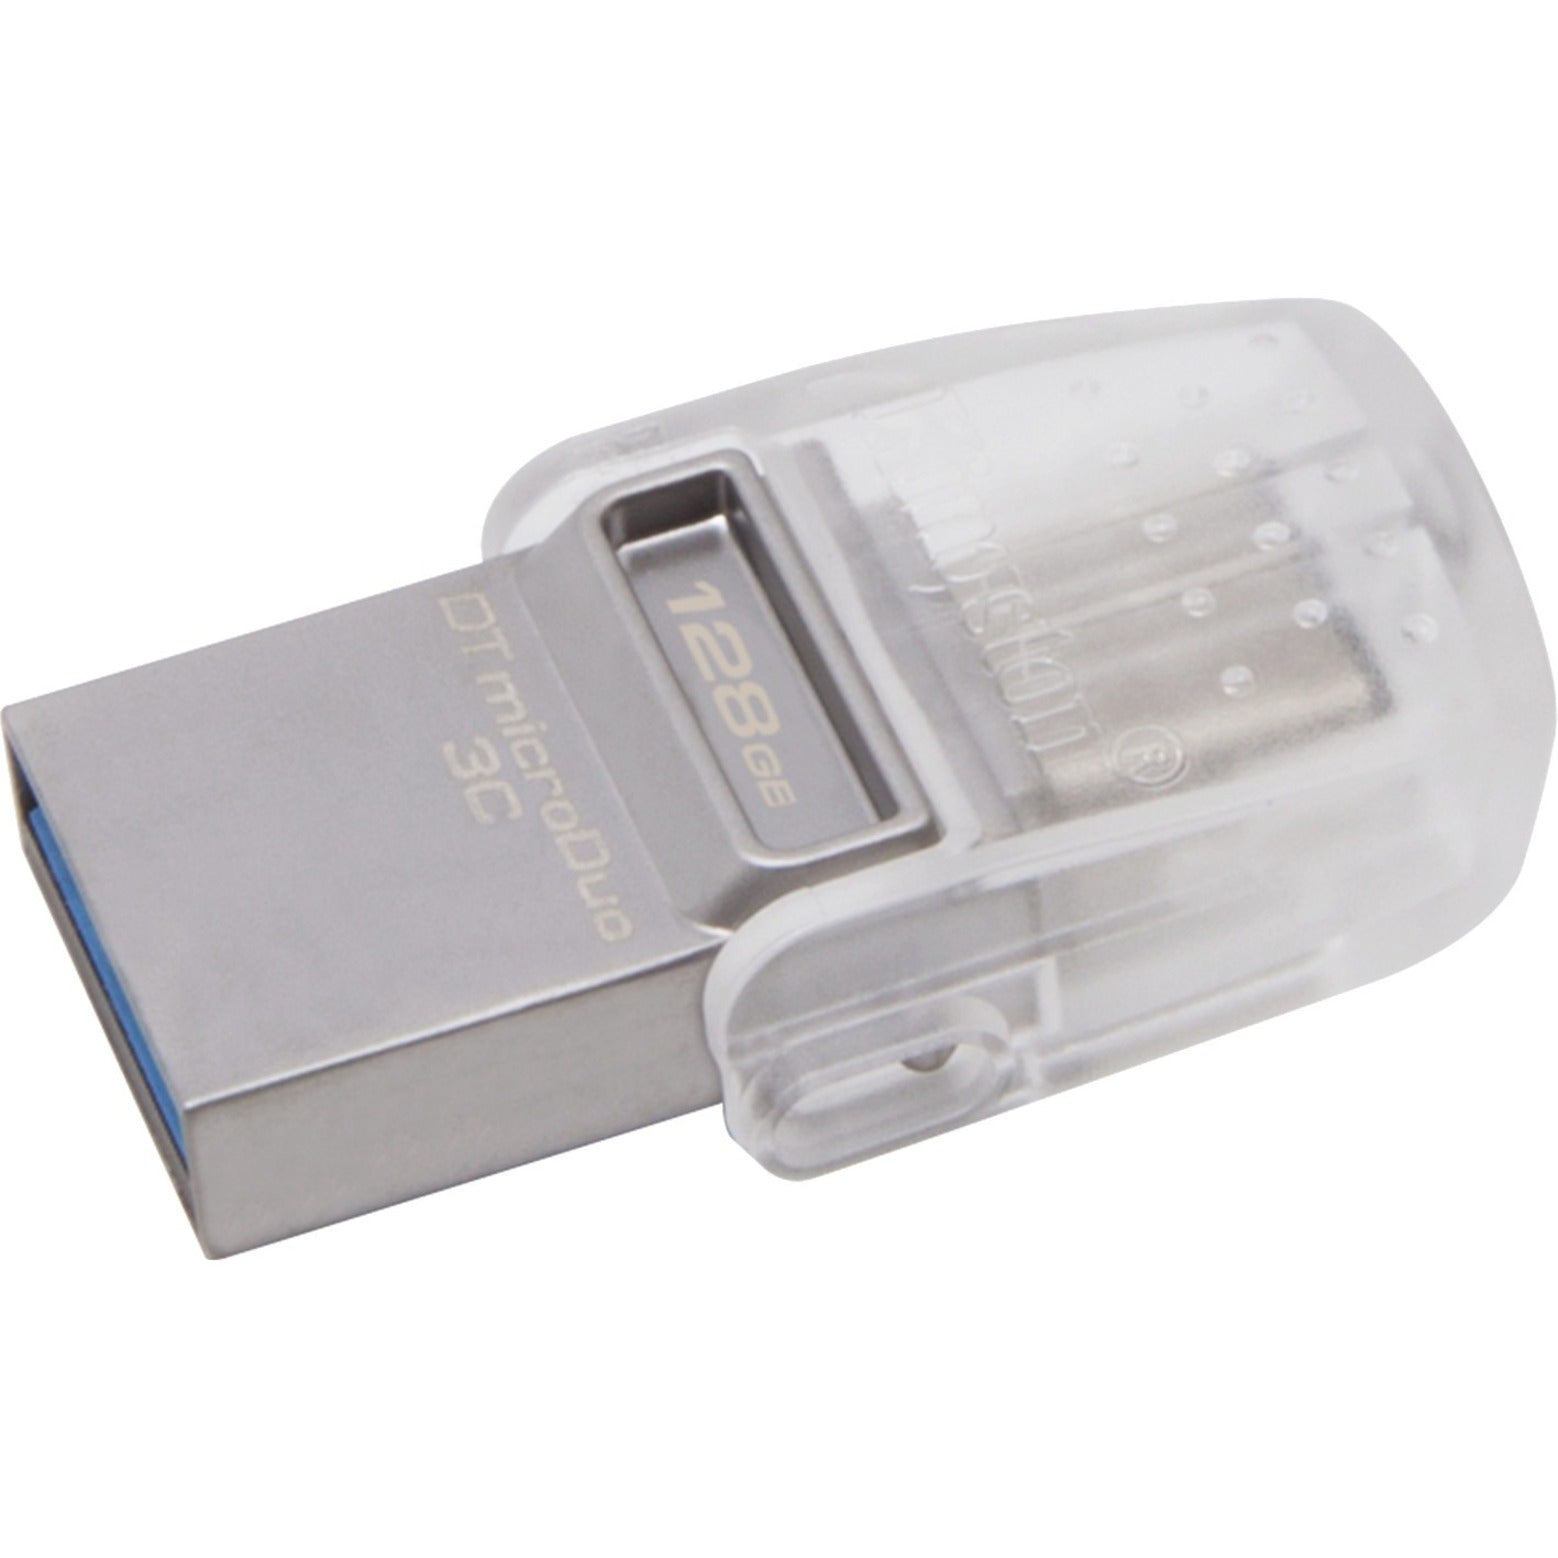 Kingston DTDUO3C/128GB DataTraveler microDuo 3C USB Flash Drive, 128GB Storage Capacity